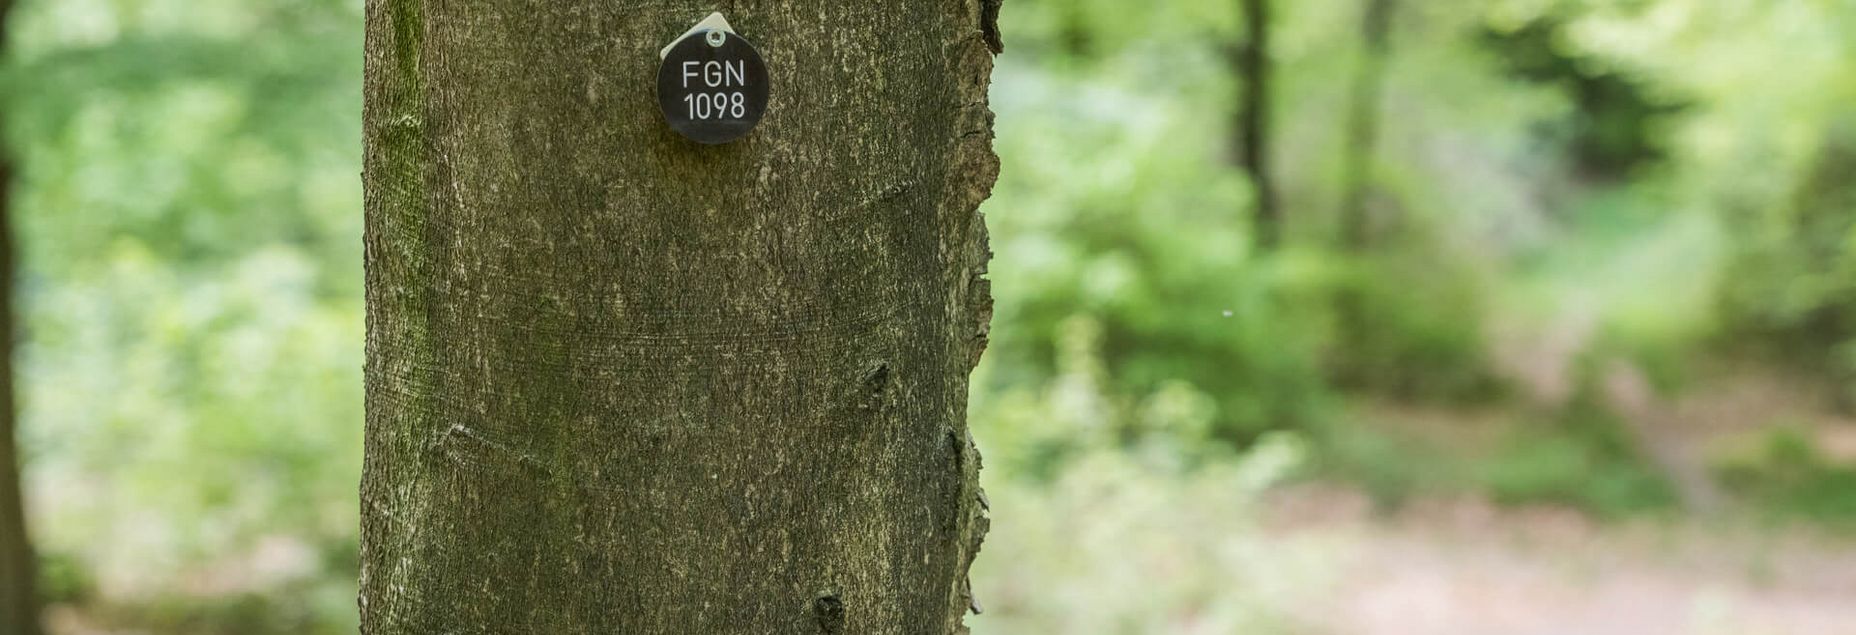 Baum FGN 1098 - Plakette